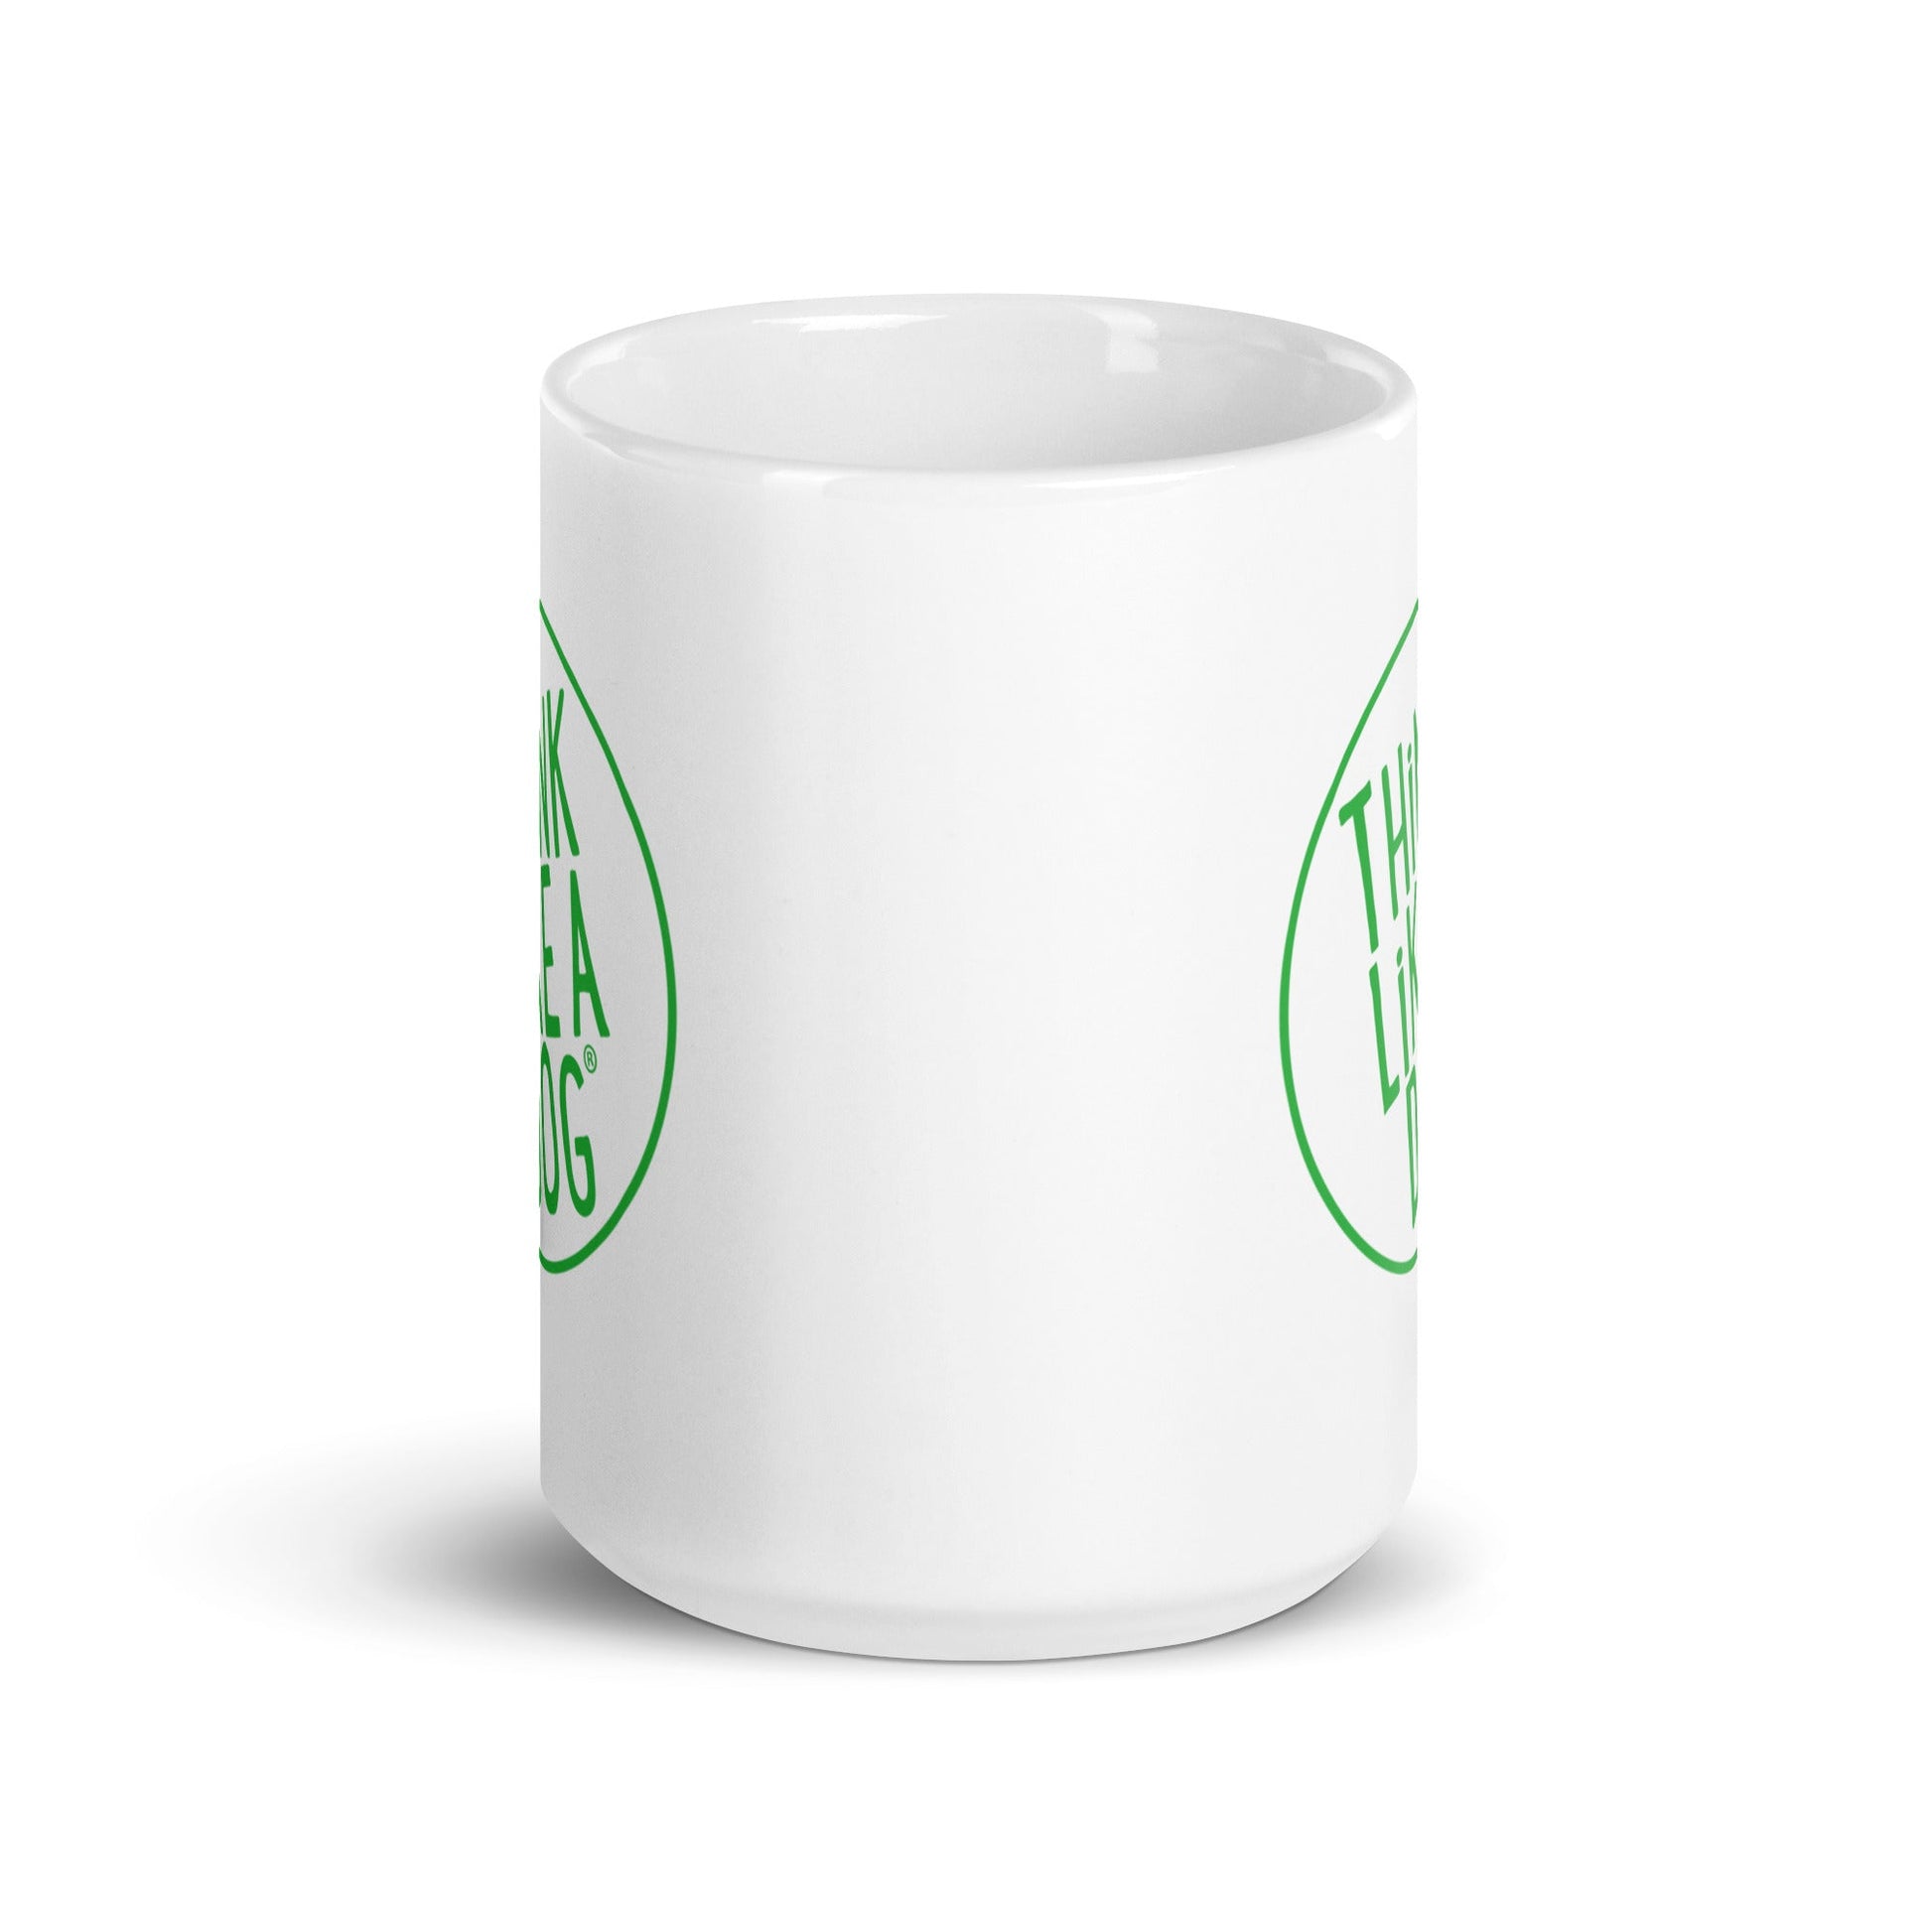 A THiNK LiKE A DOG® Green Logo on White Glossy Mug for dog lovers.